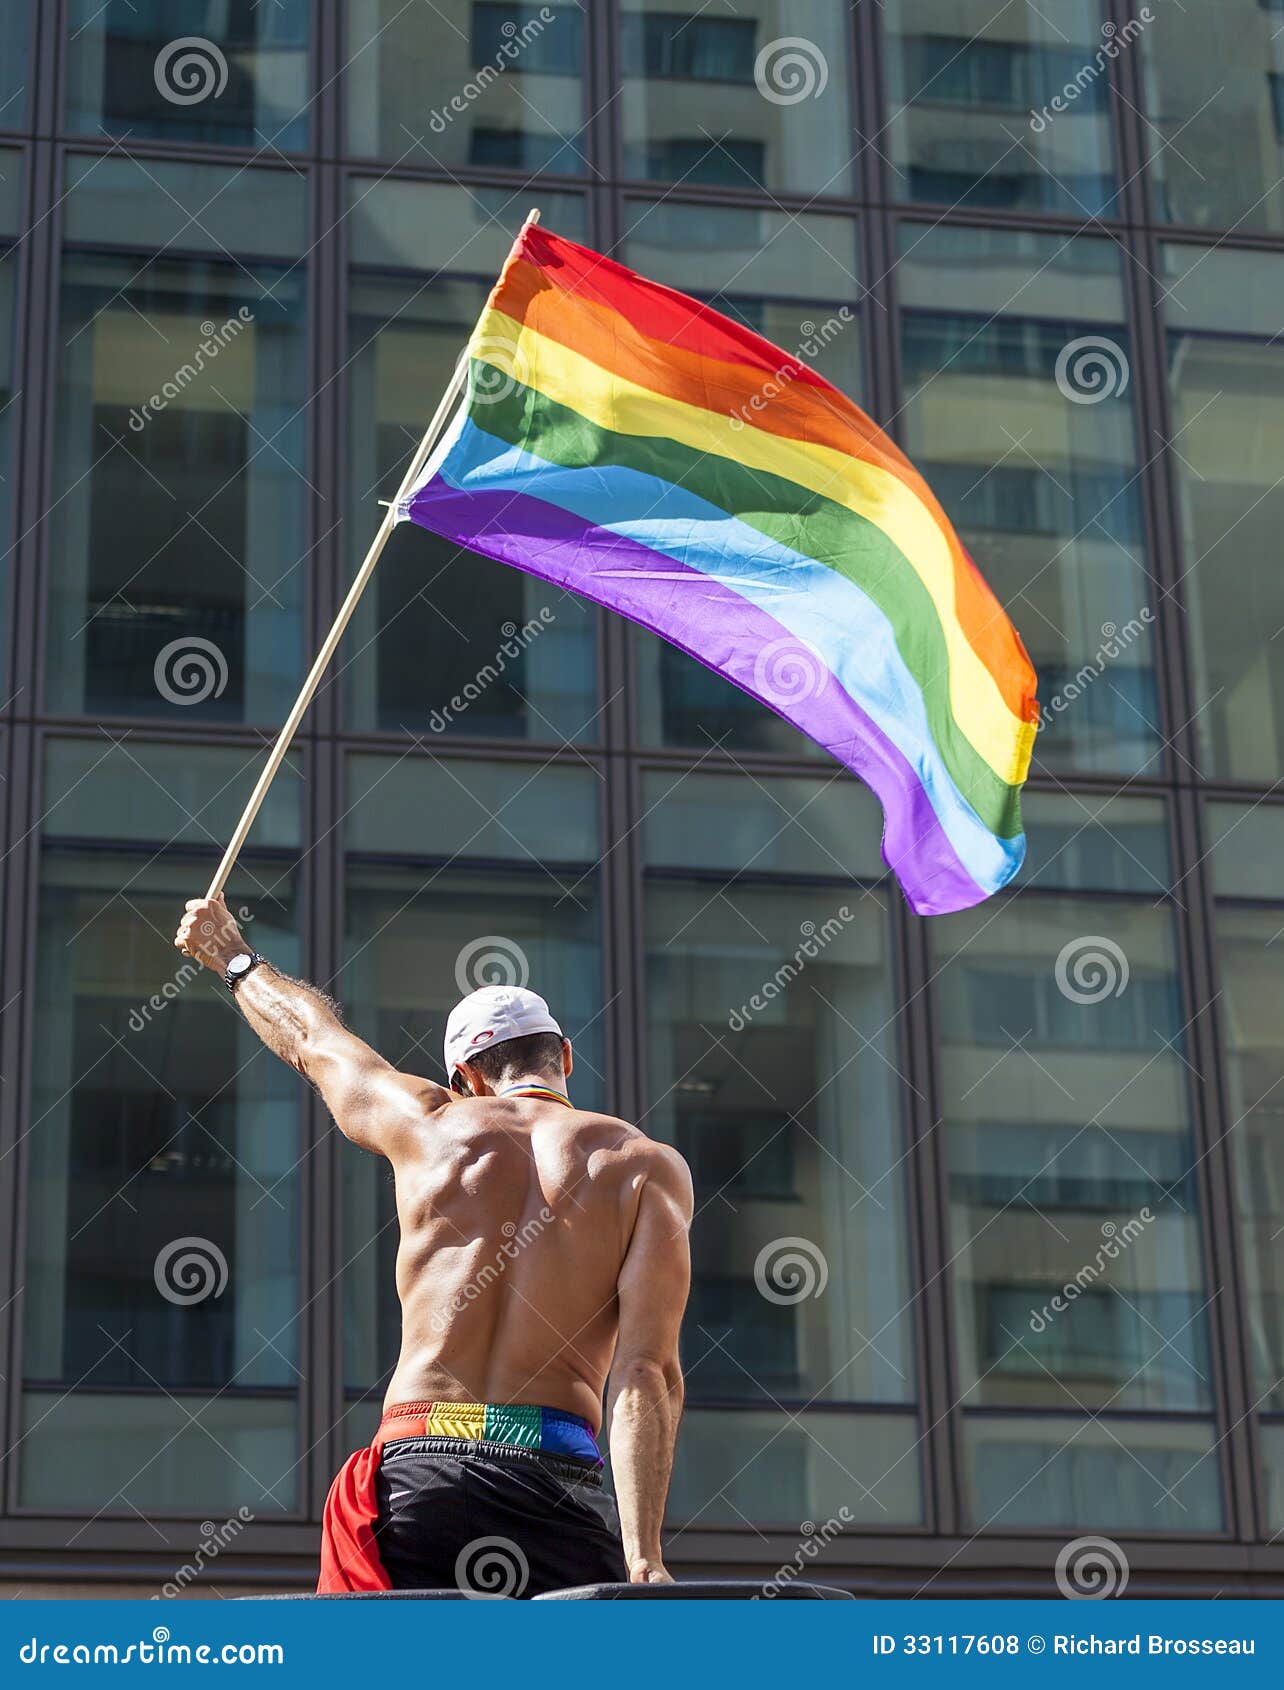 gay-pride-flag-waving-man-rainbow-parade-33117608.jpg